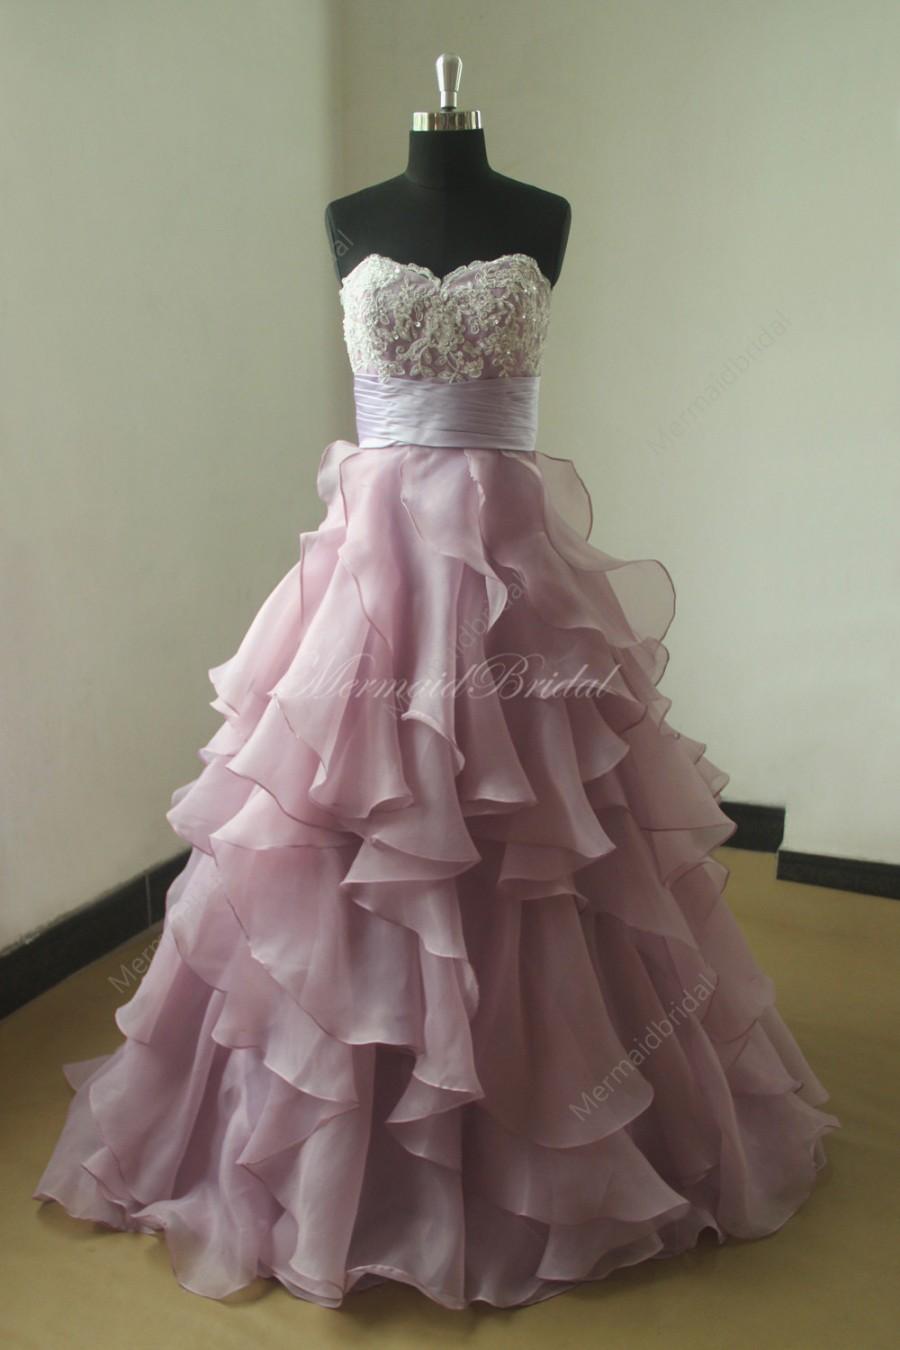 زفاف - A line Lavender organza ruffled lace wedding dress